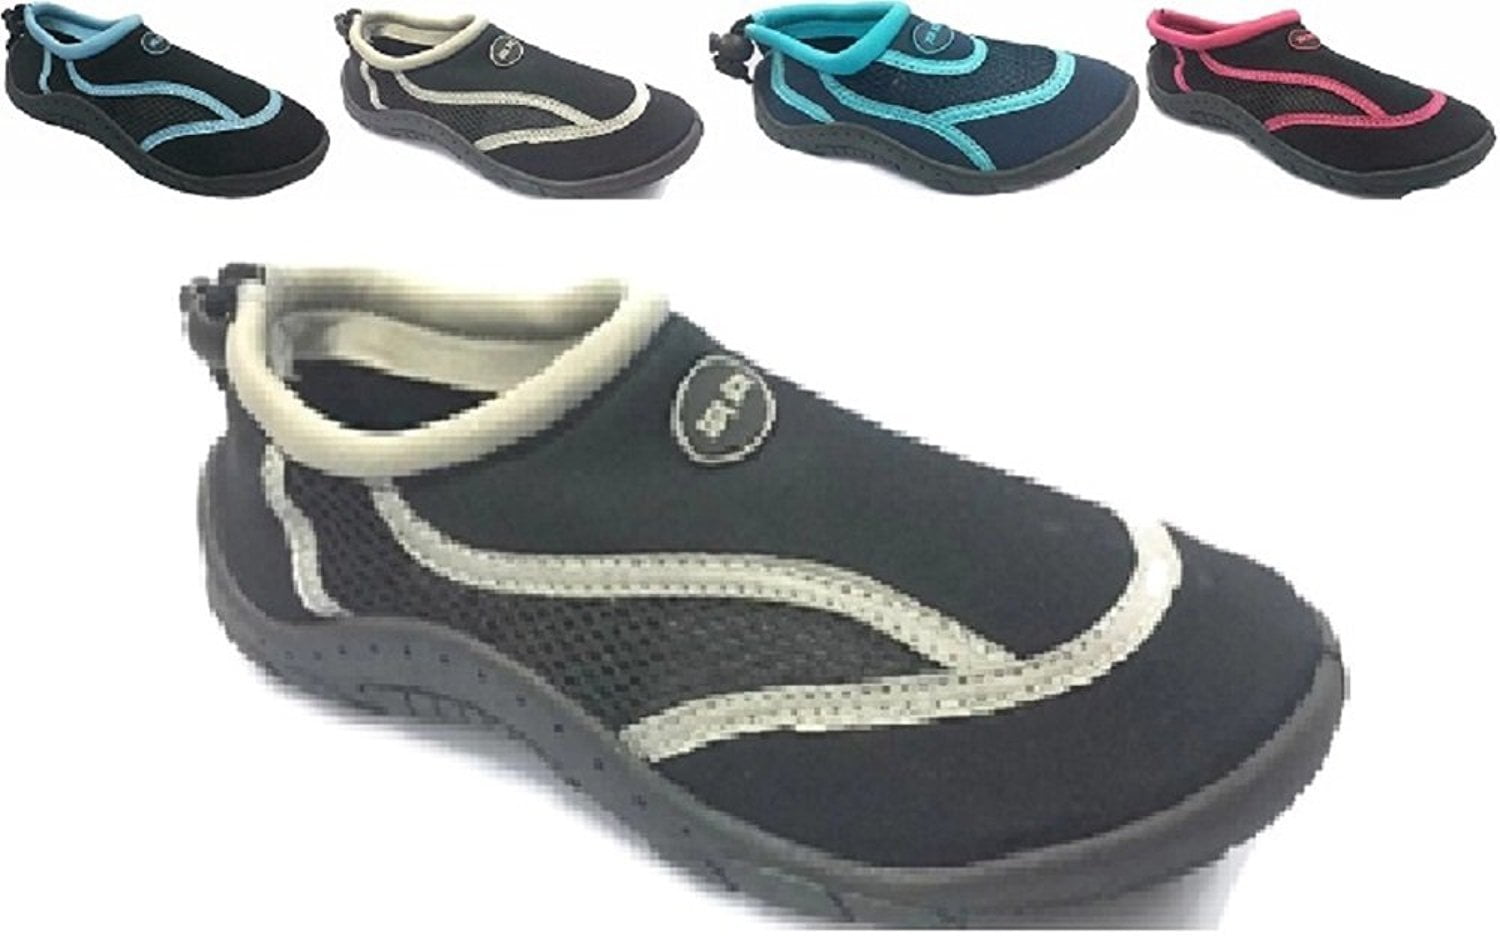 SAGUARO Water Shoes Aqua Surf Swim Skin Socks for Men Women Beach Pool Sport A32 